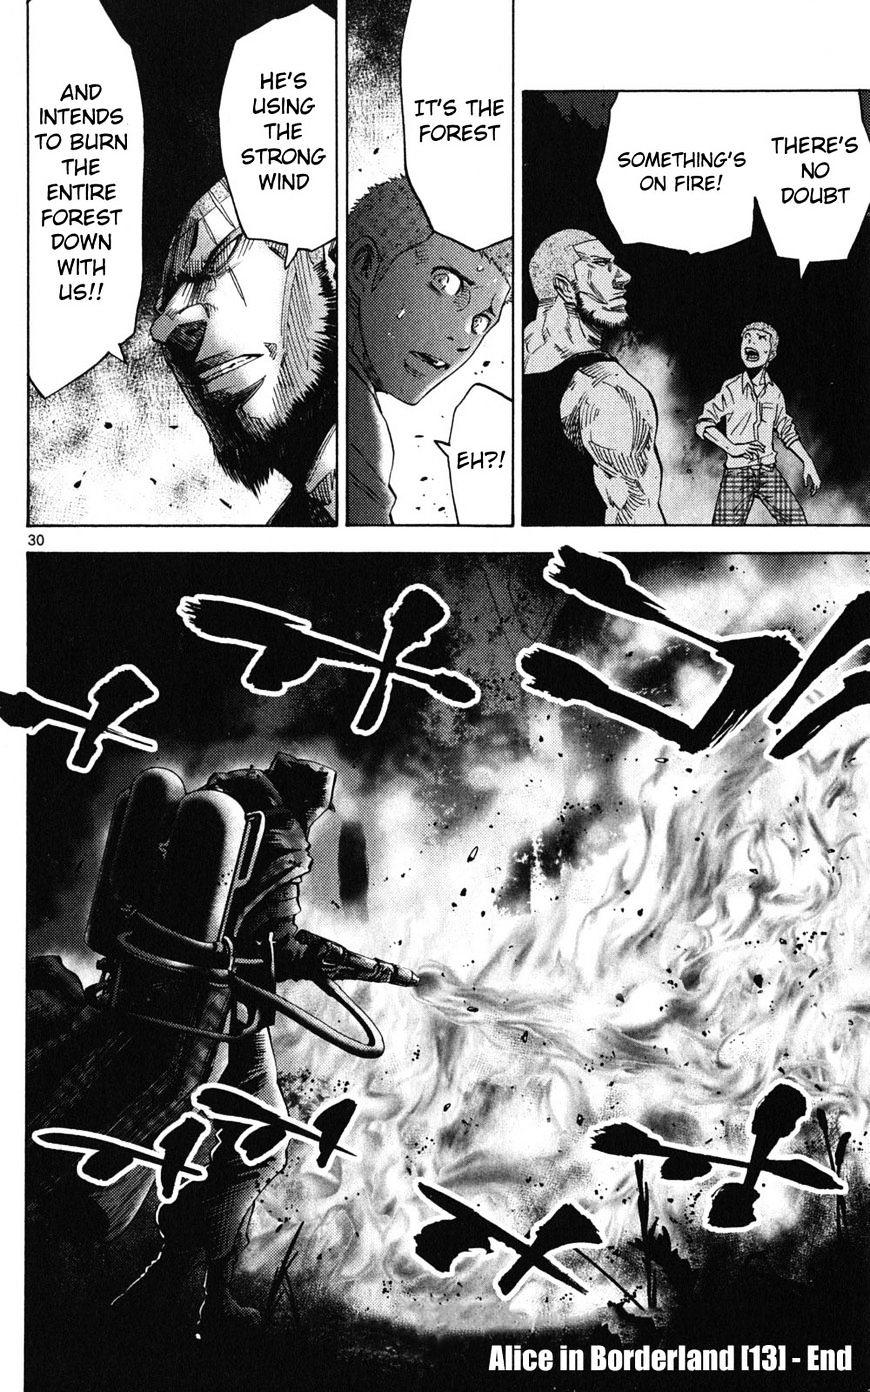 Imawa No Kuni No Alice Chapter 49.2 : Side Story 5 - King Of Spades (2) page 30 - Mangakakalot